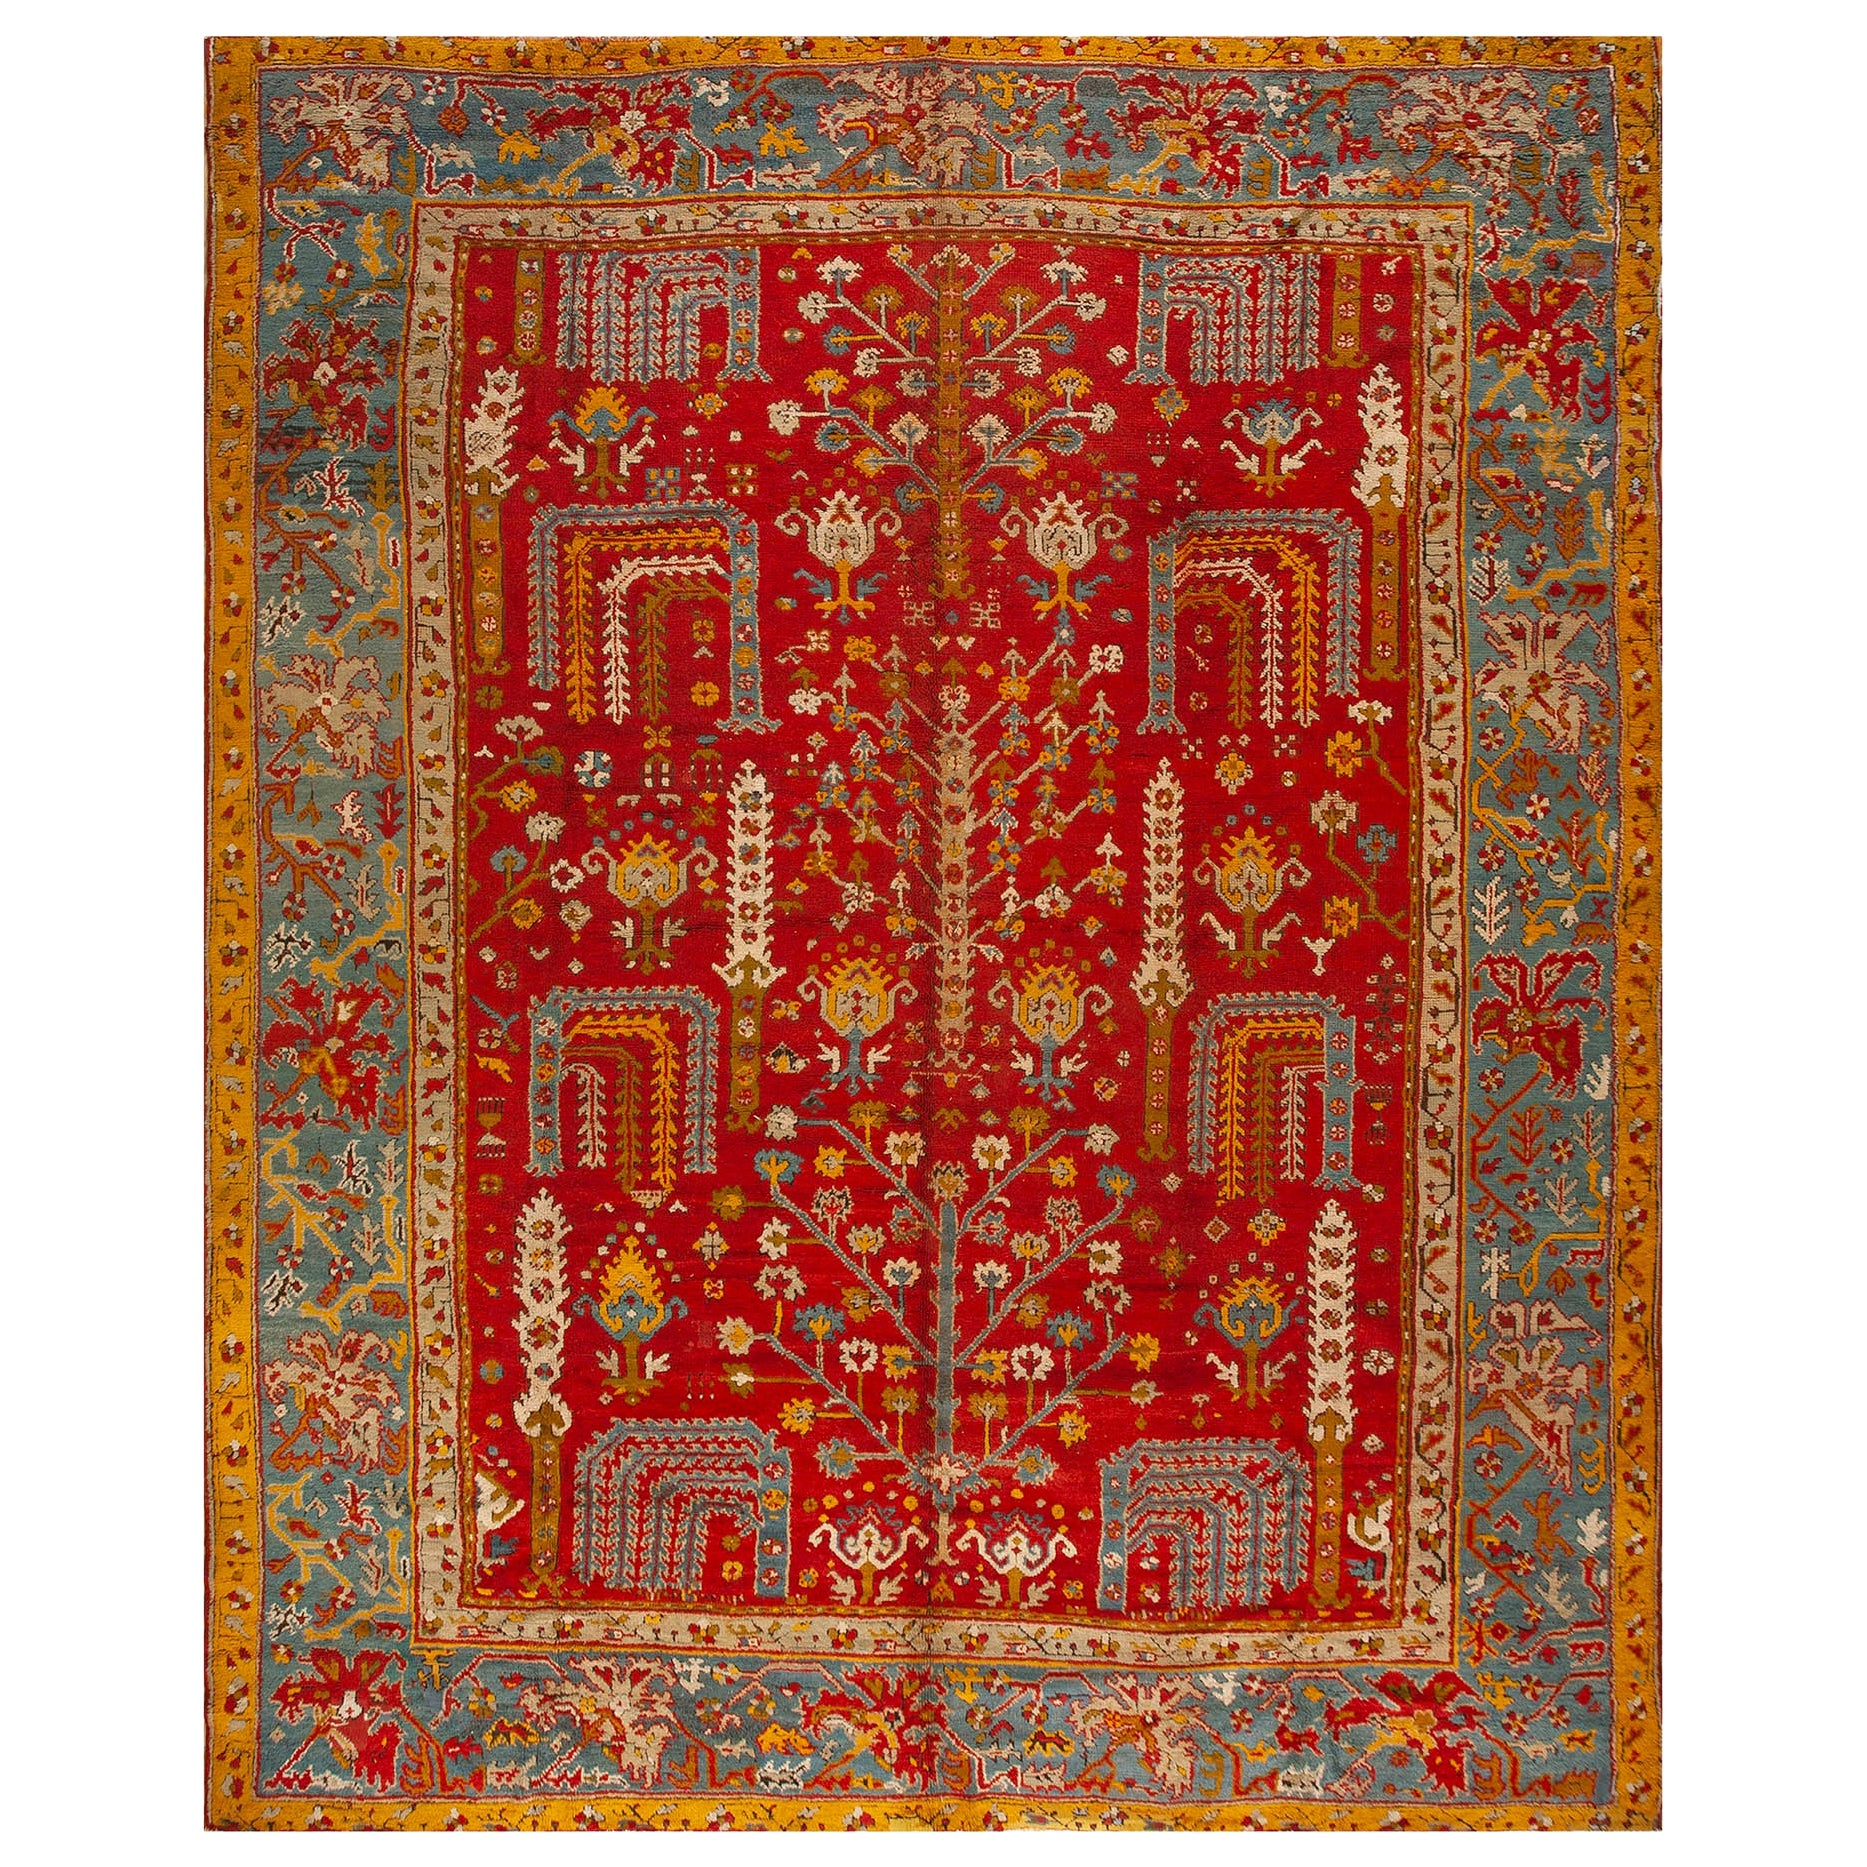 Late 19th Century Turkish Oushak Carpet  ( 11' 5'' x 14' 6'' - 348 x 442 cm ) For Sale